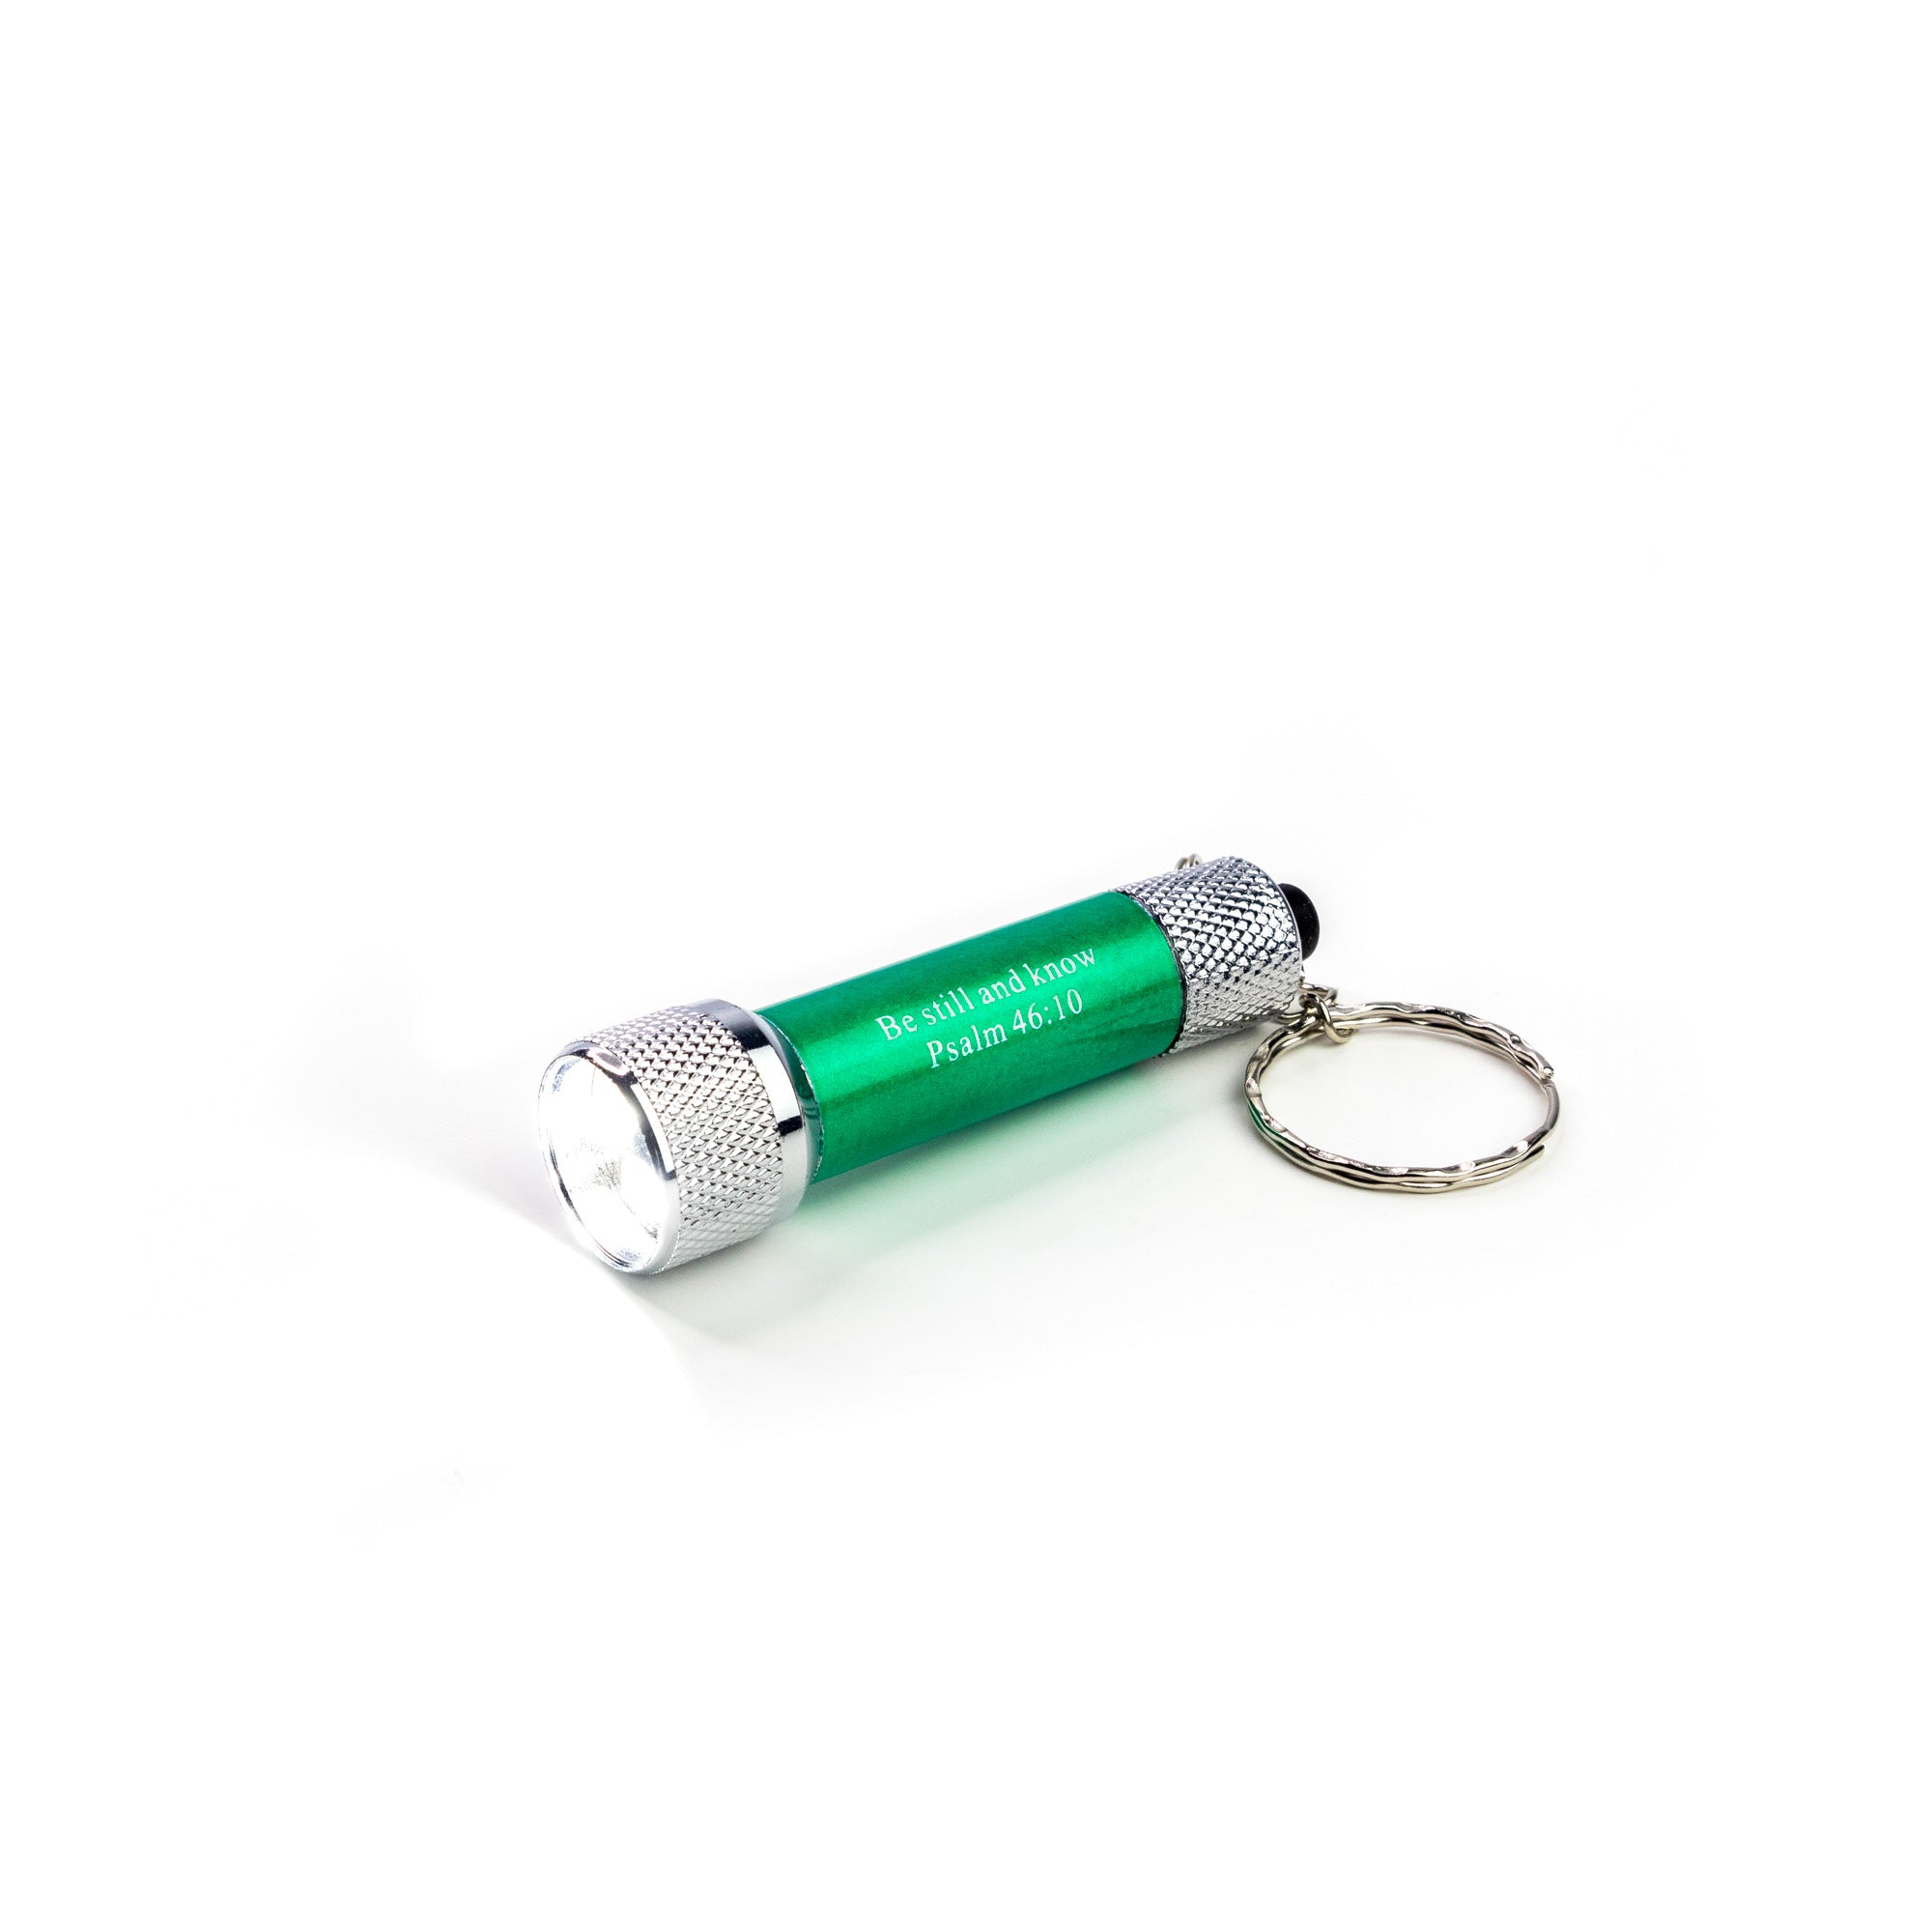 Be Still - Green 5 LED Flashlight Keychain